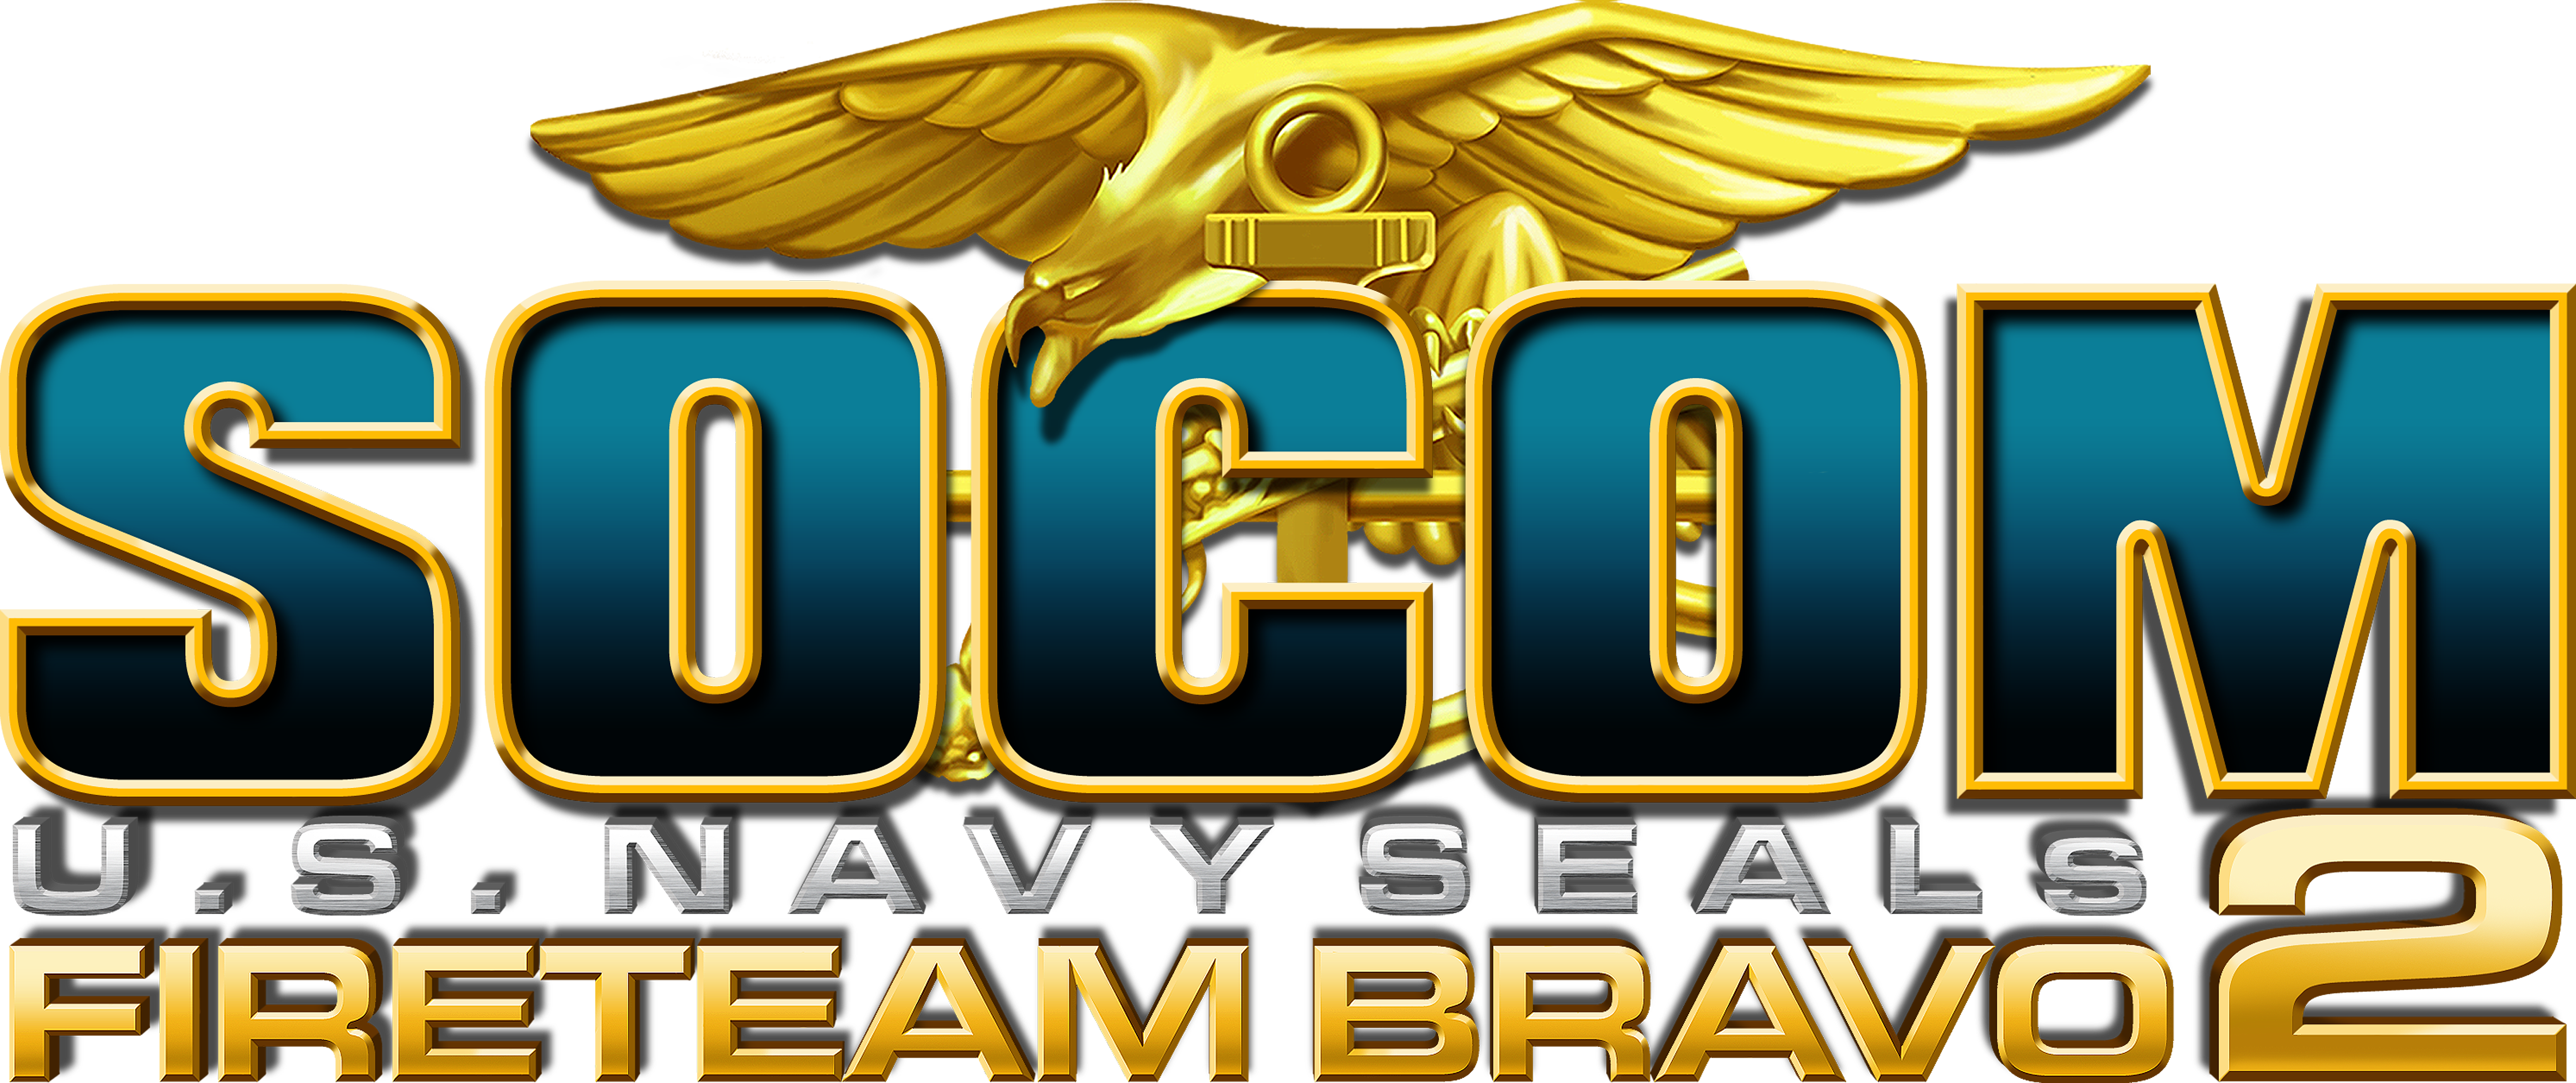 SOCOM: U.S. Navy SEALs Fireteam Bravo 2, SOCOM Wiki